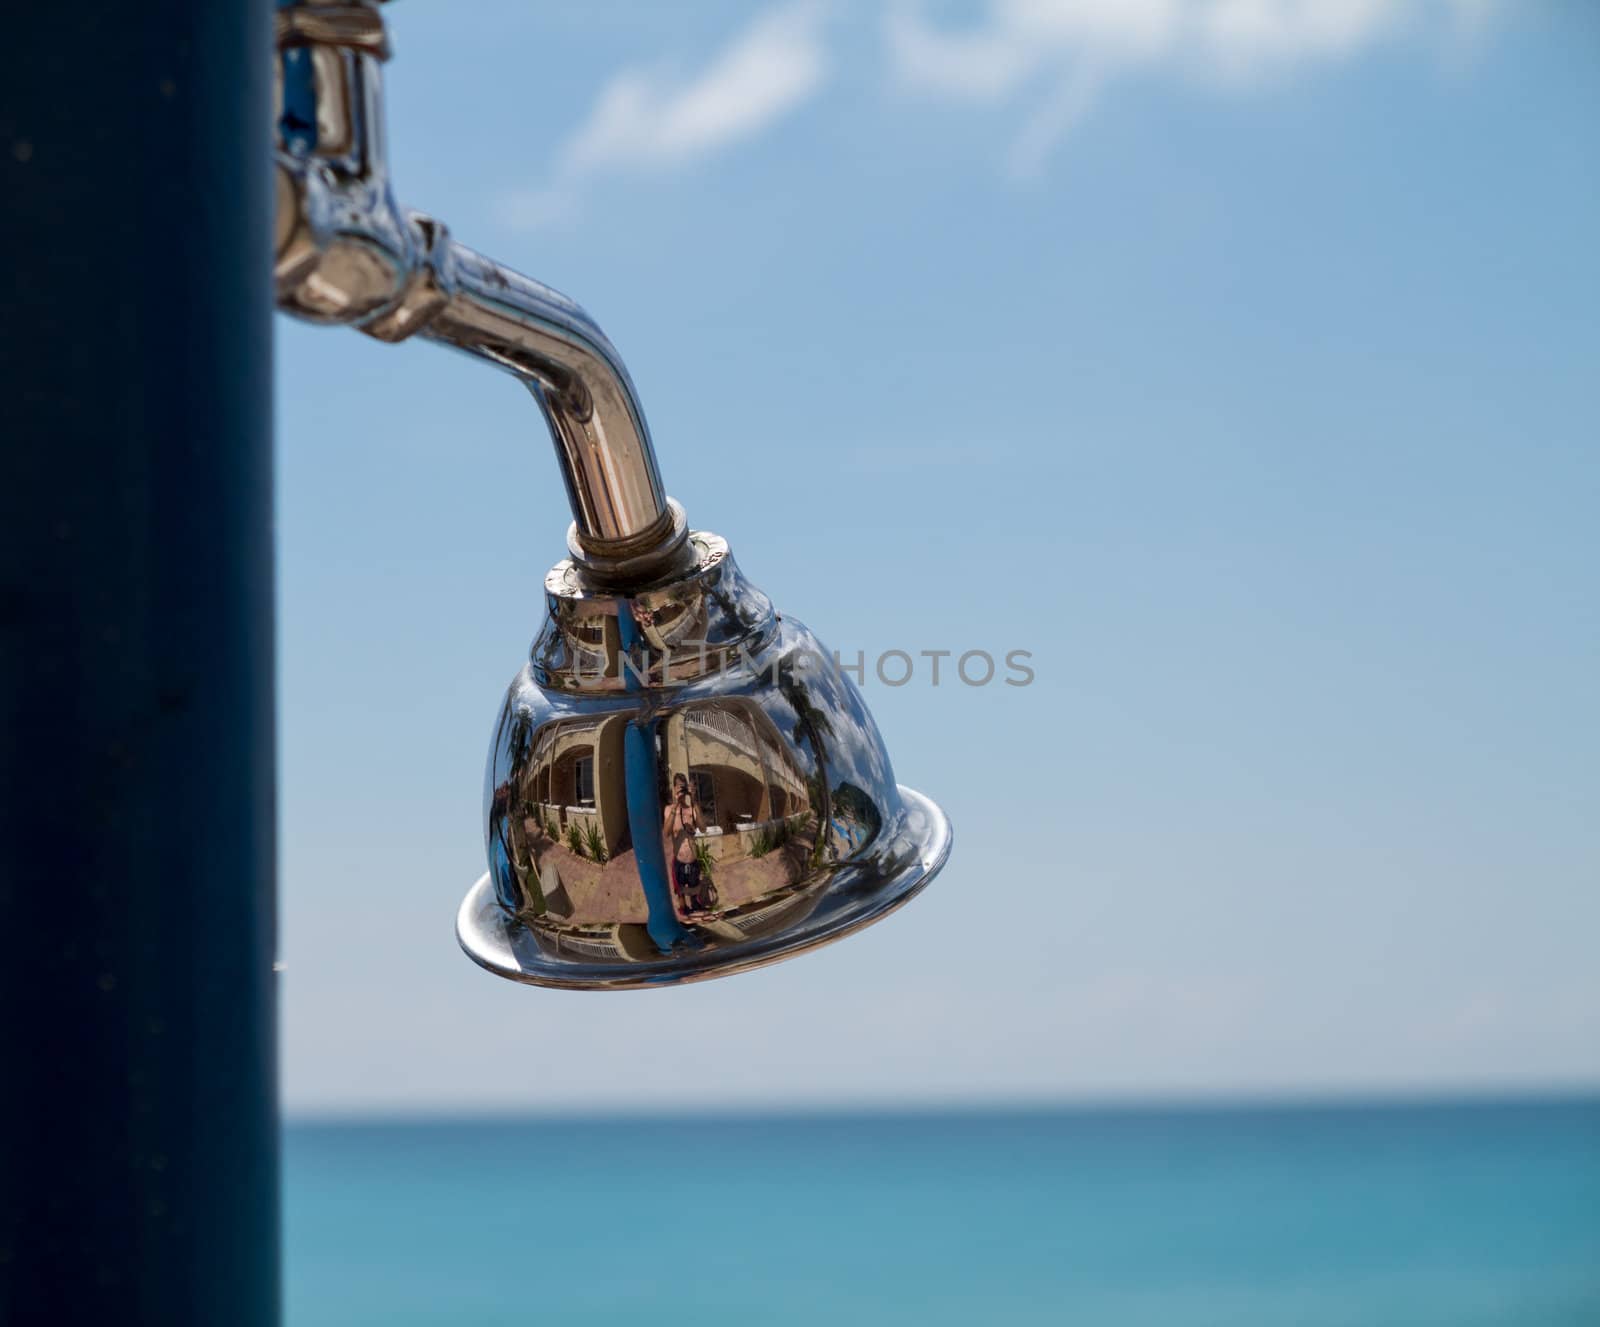 Reflections in beach shower head by ocean by steheap